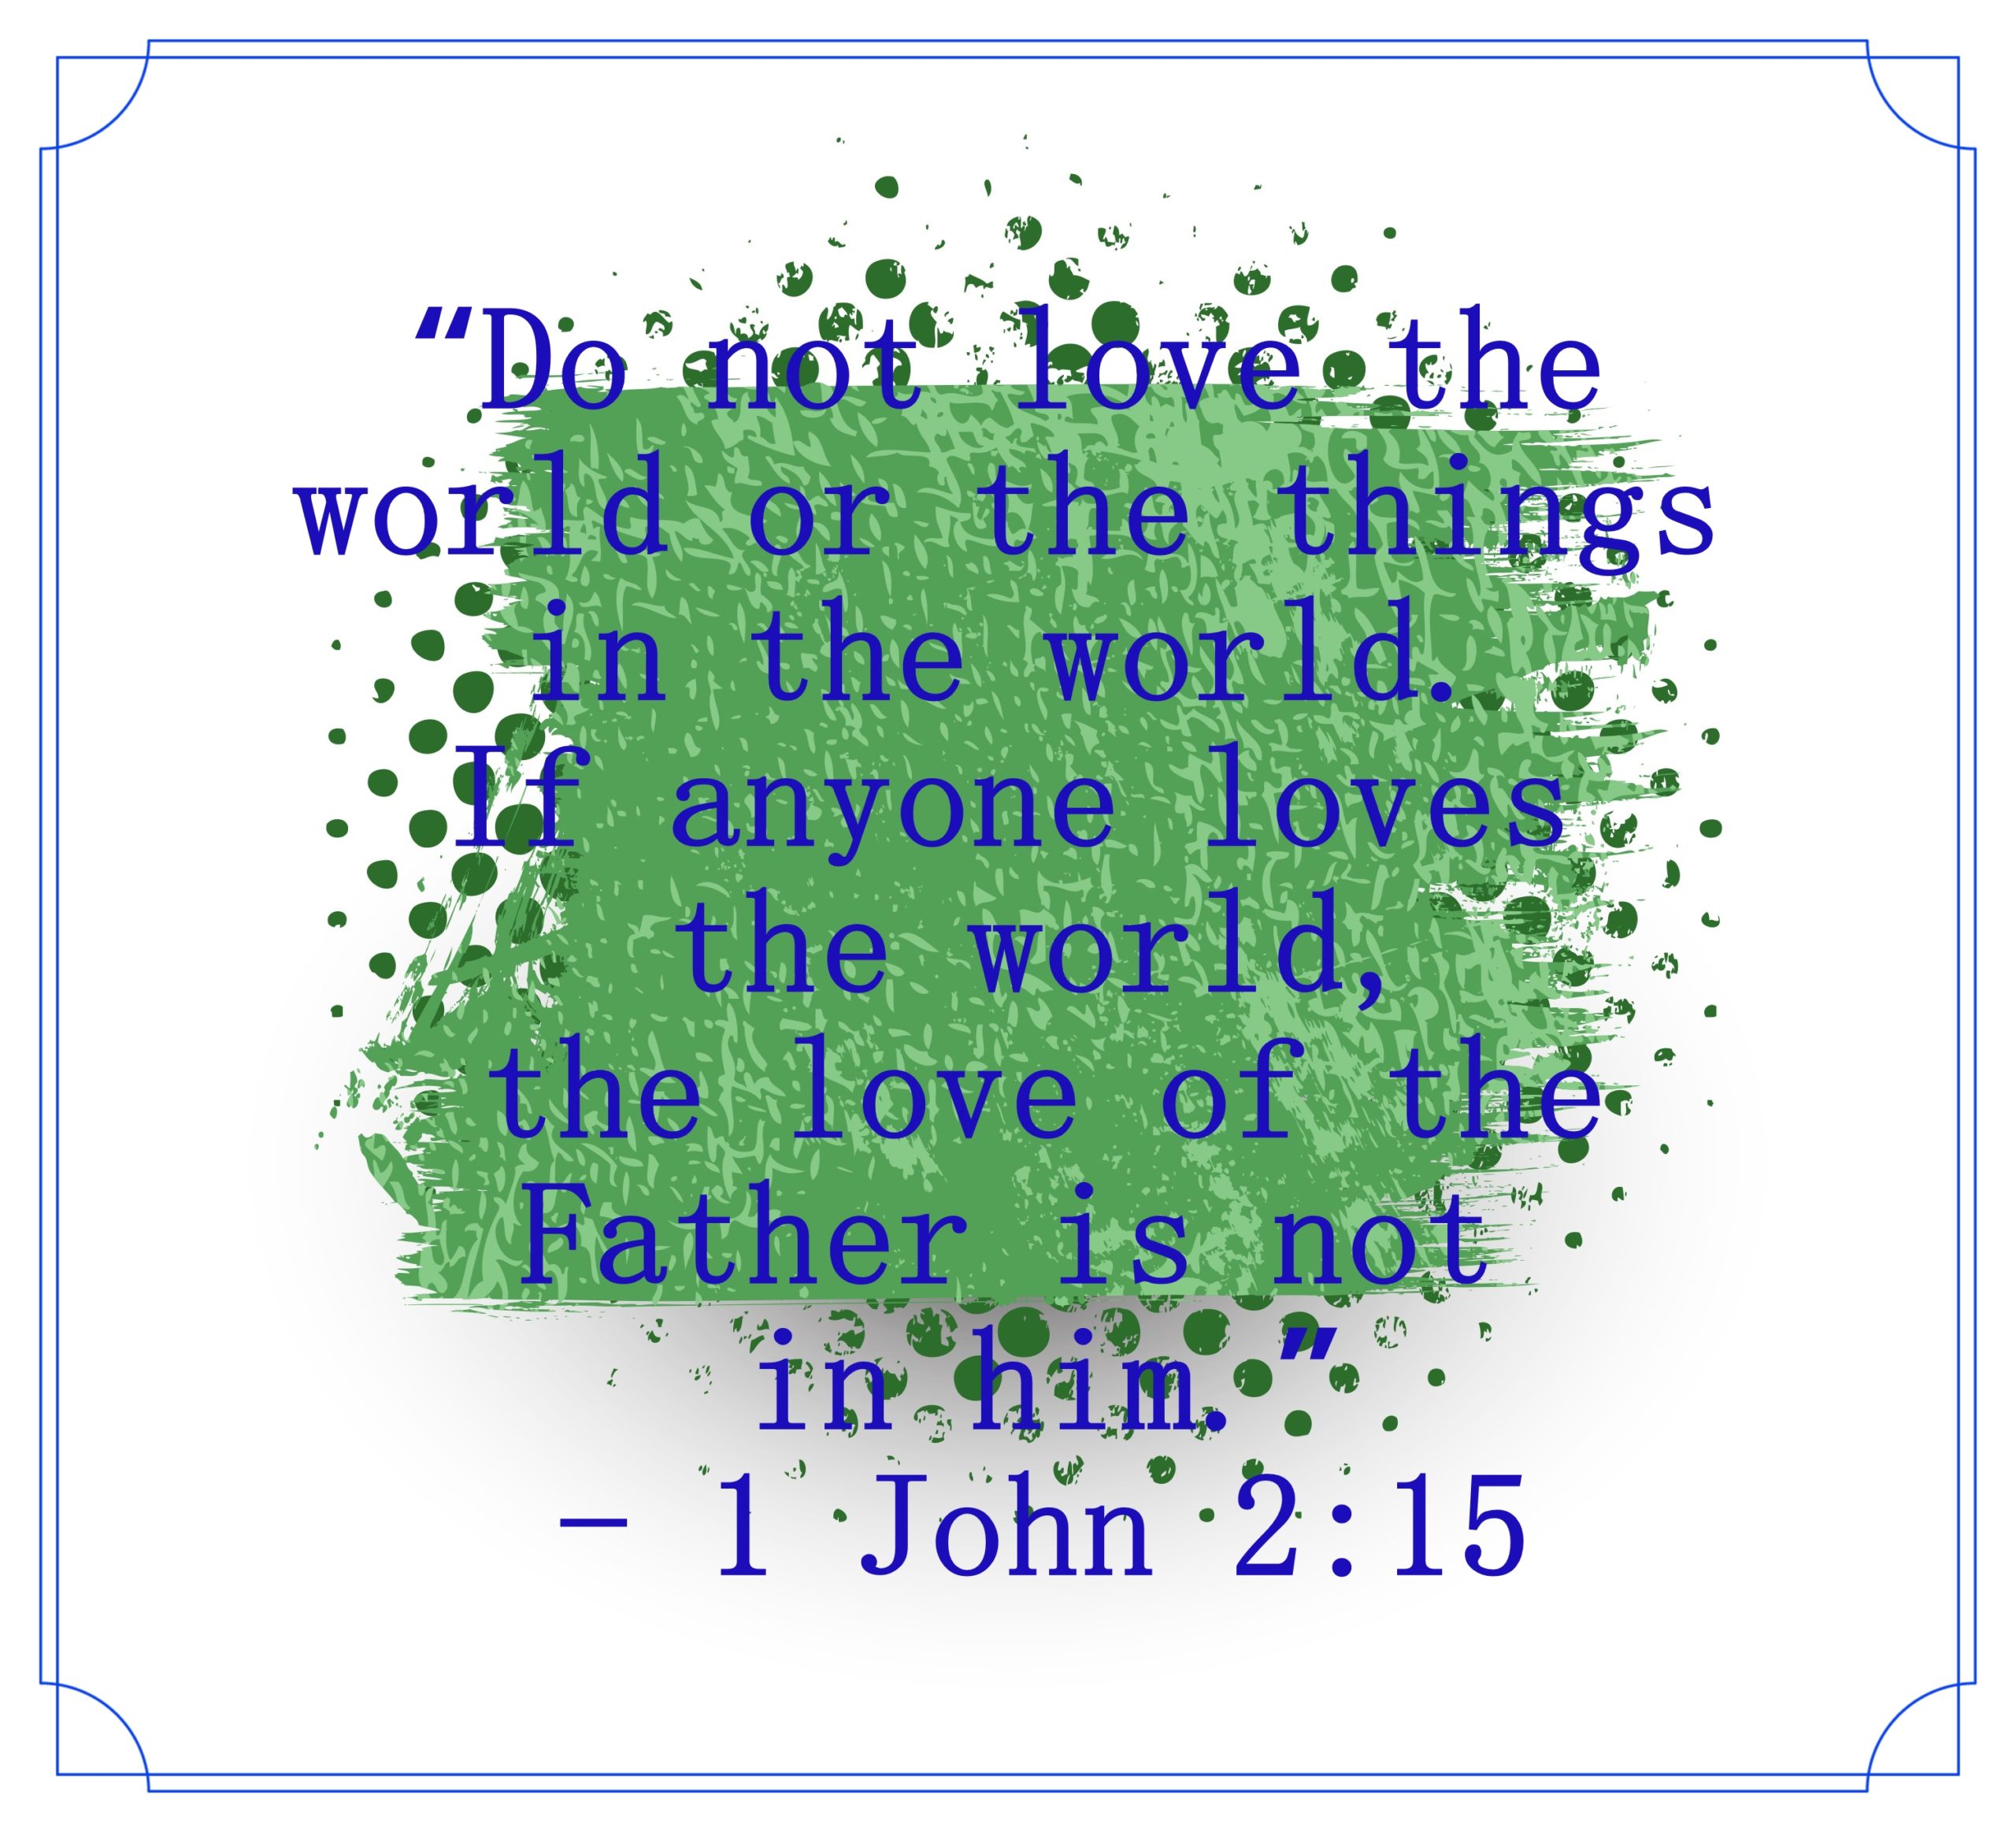 Wednesday’s Words, 1 John 2:15